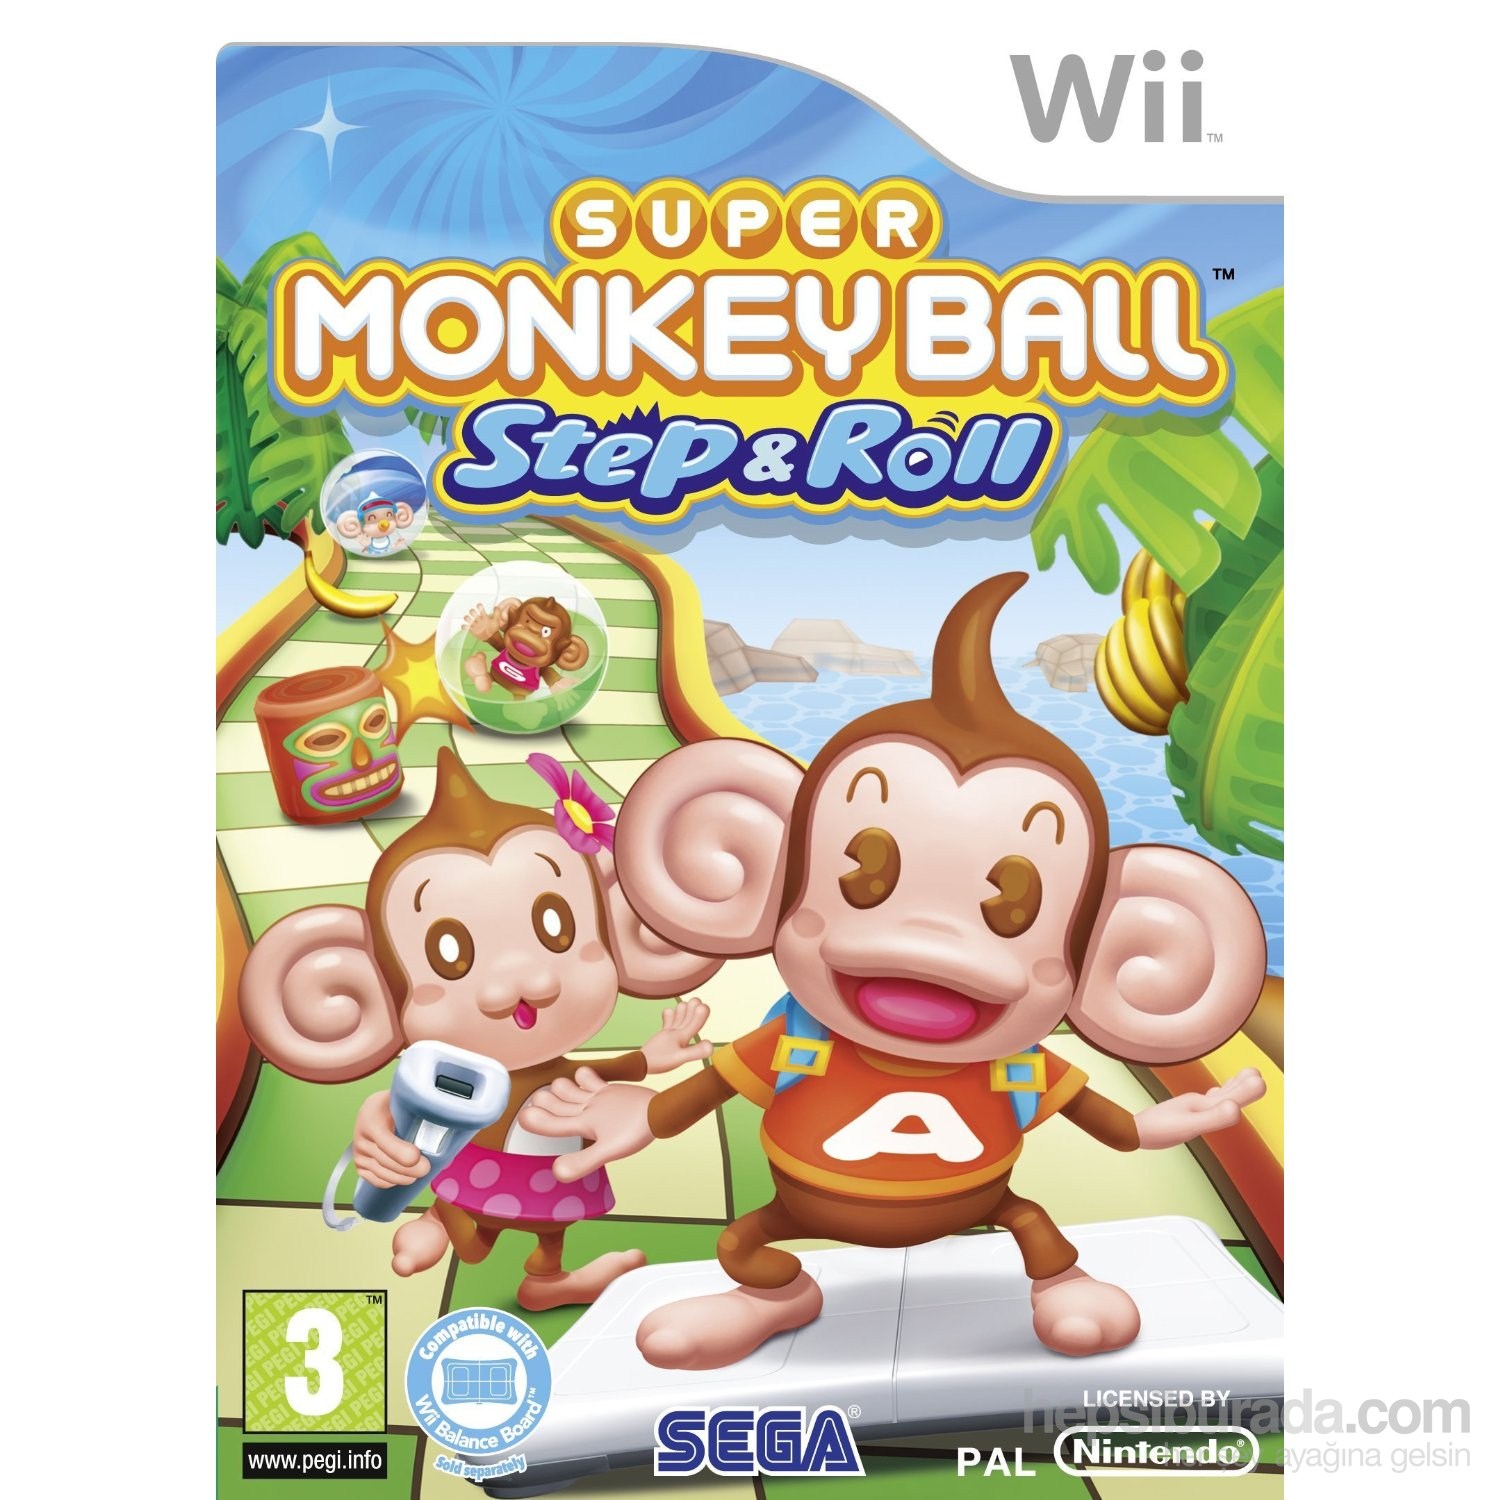 Wii Monkey Ball Game